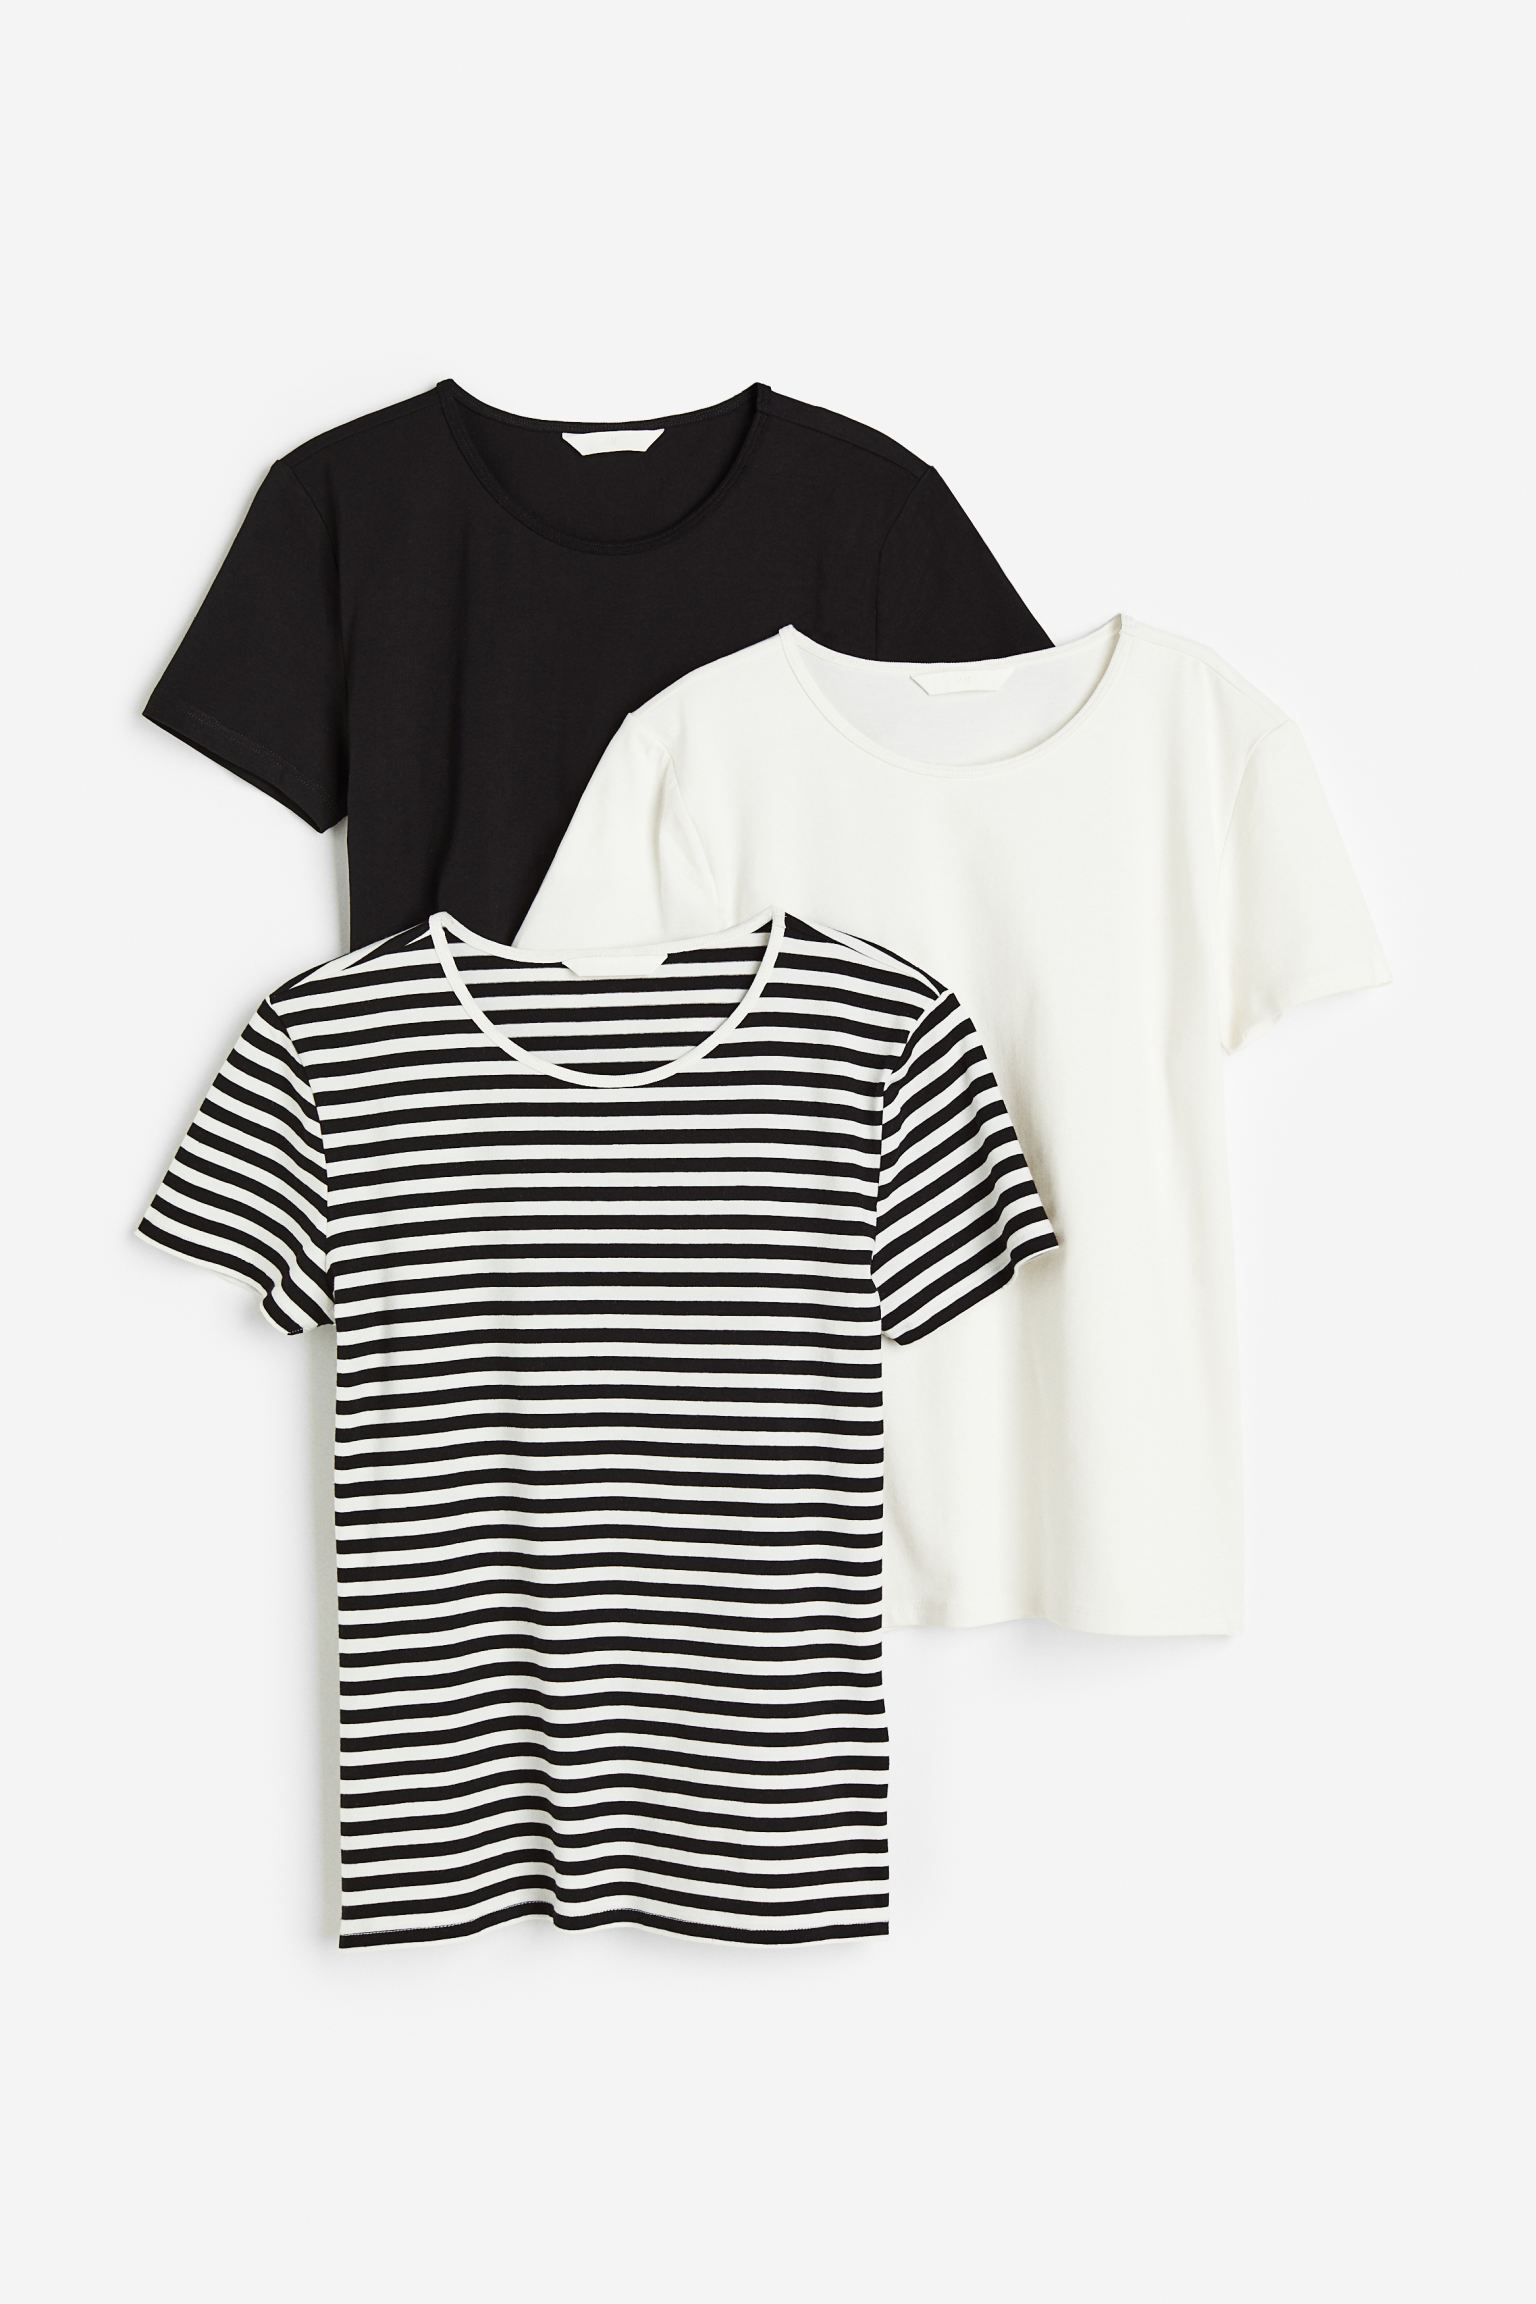 Комплект футболок женских H&M 1166415002 белых L (доставка из-за рубежа)